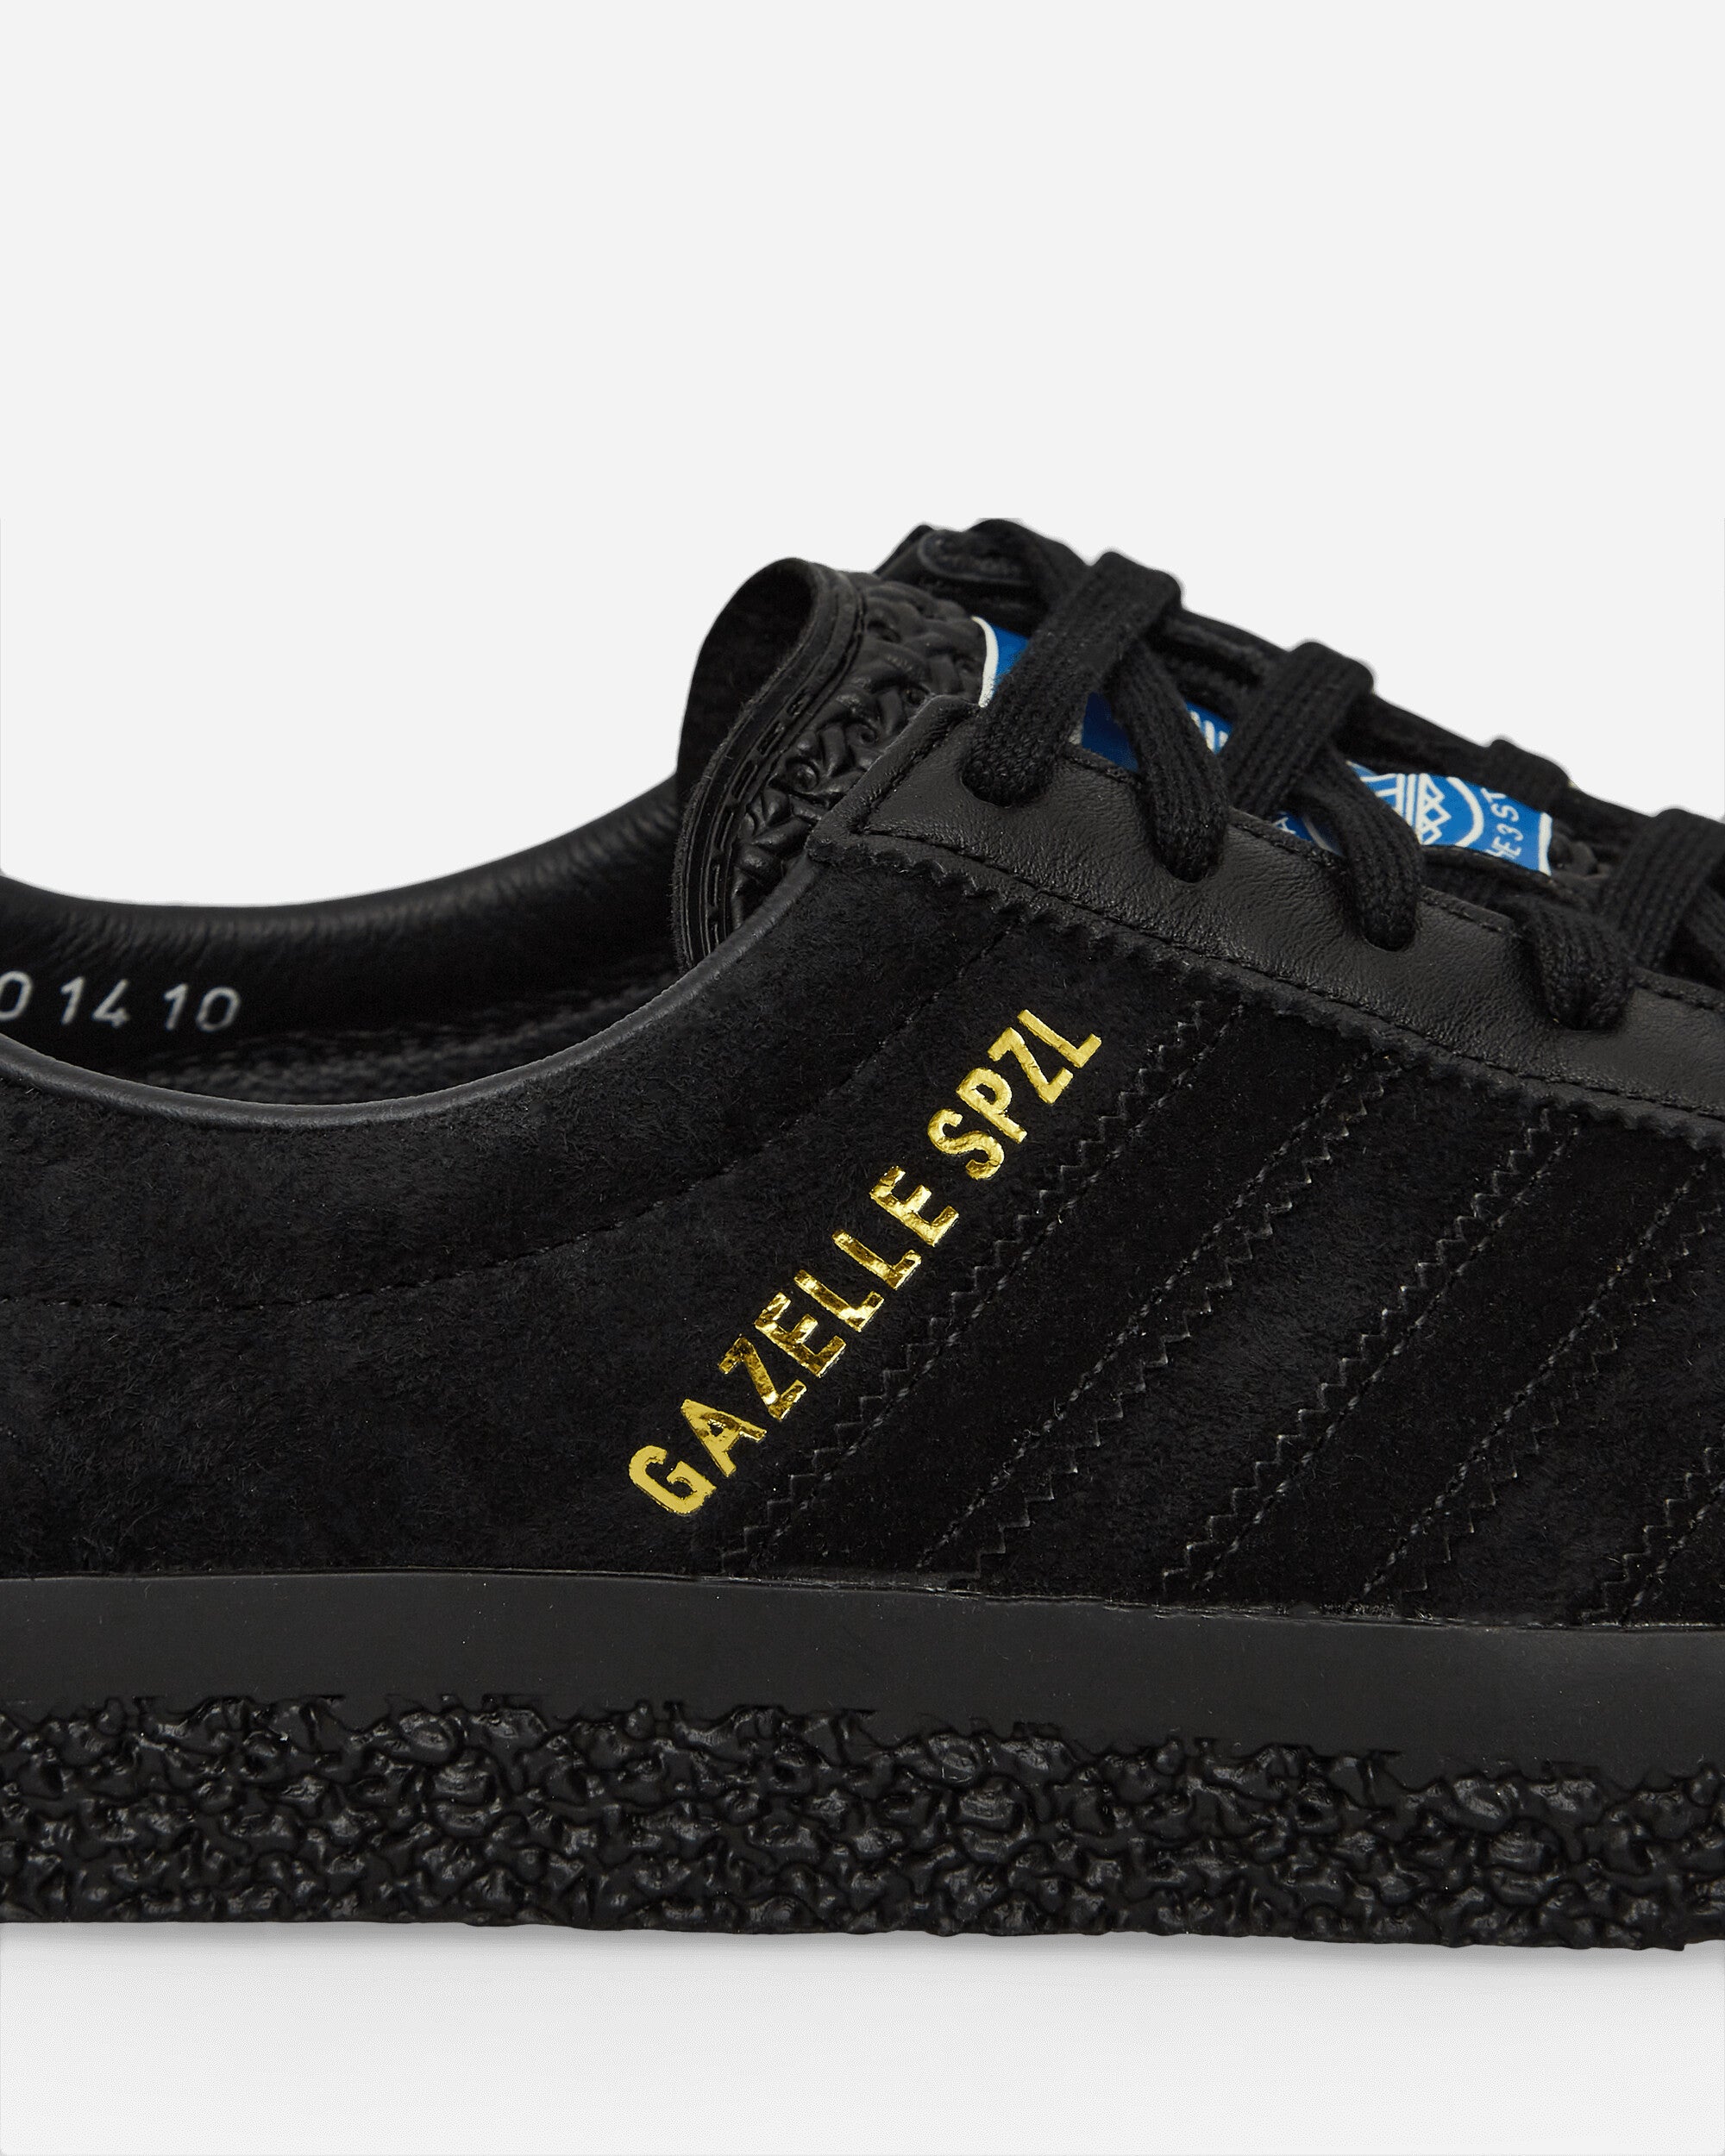 adidas Gazelle Spzl Core Black/Core Black Sneakers Low IG8939 001